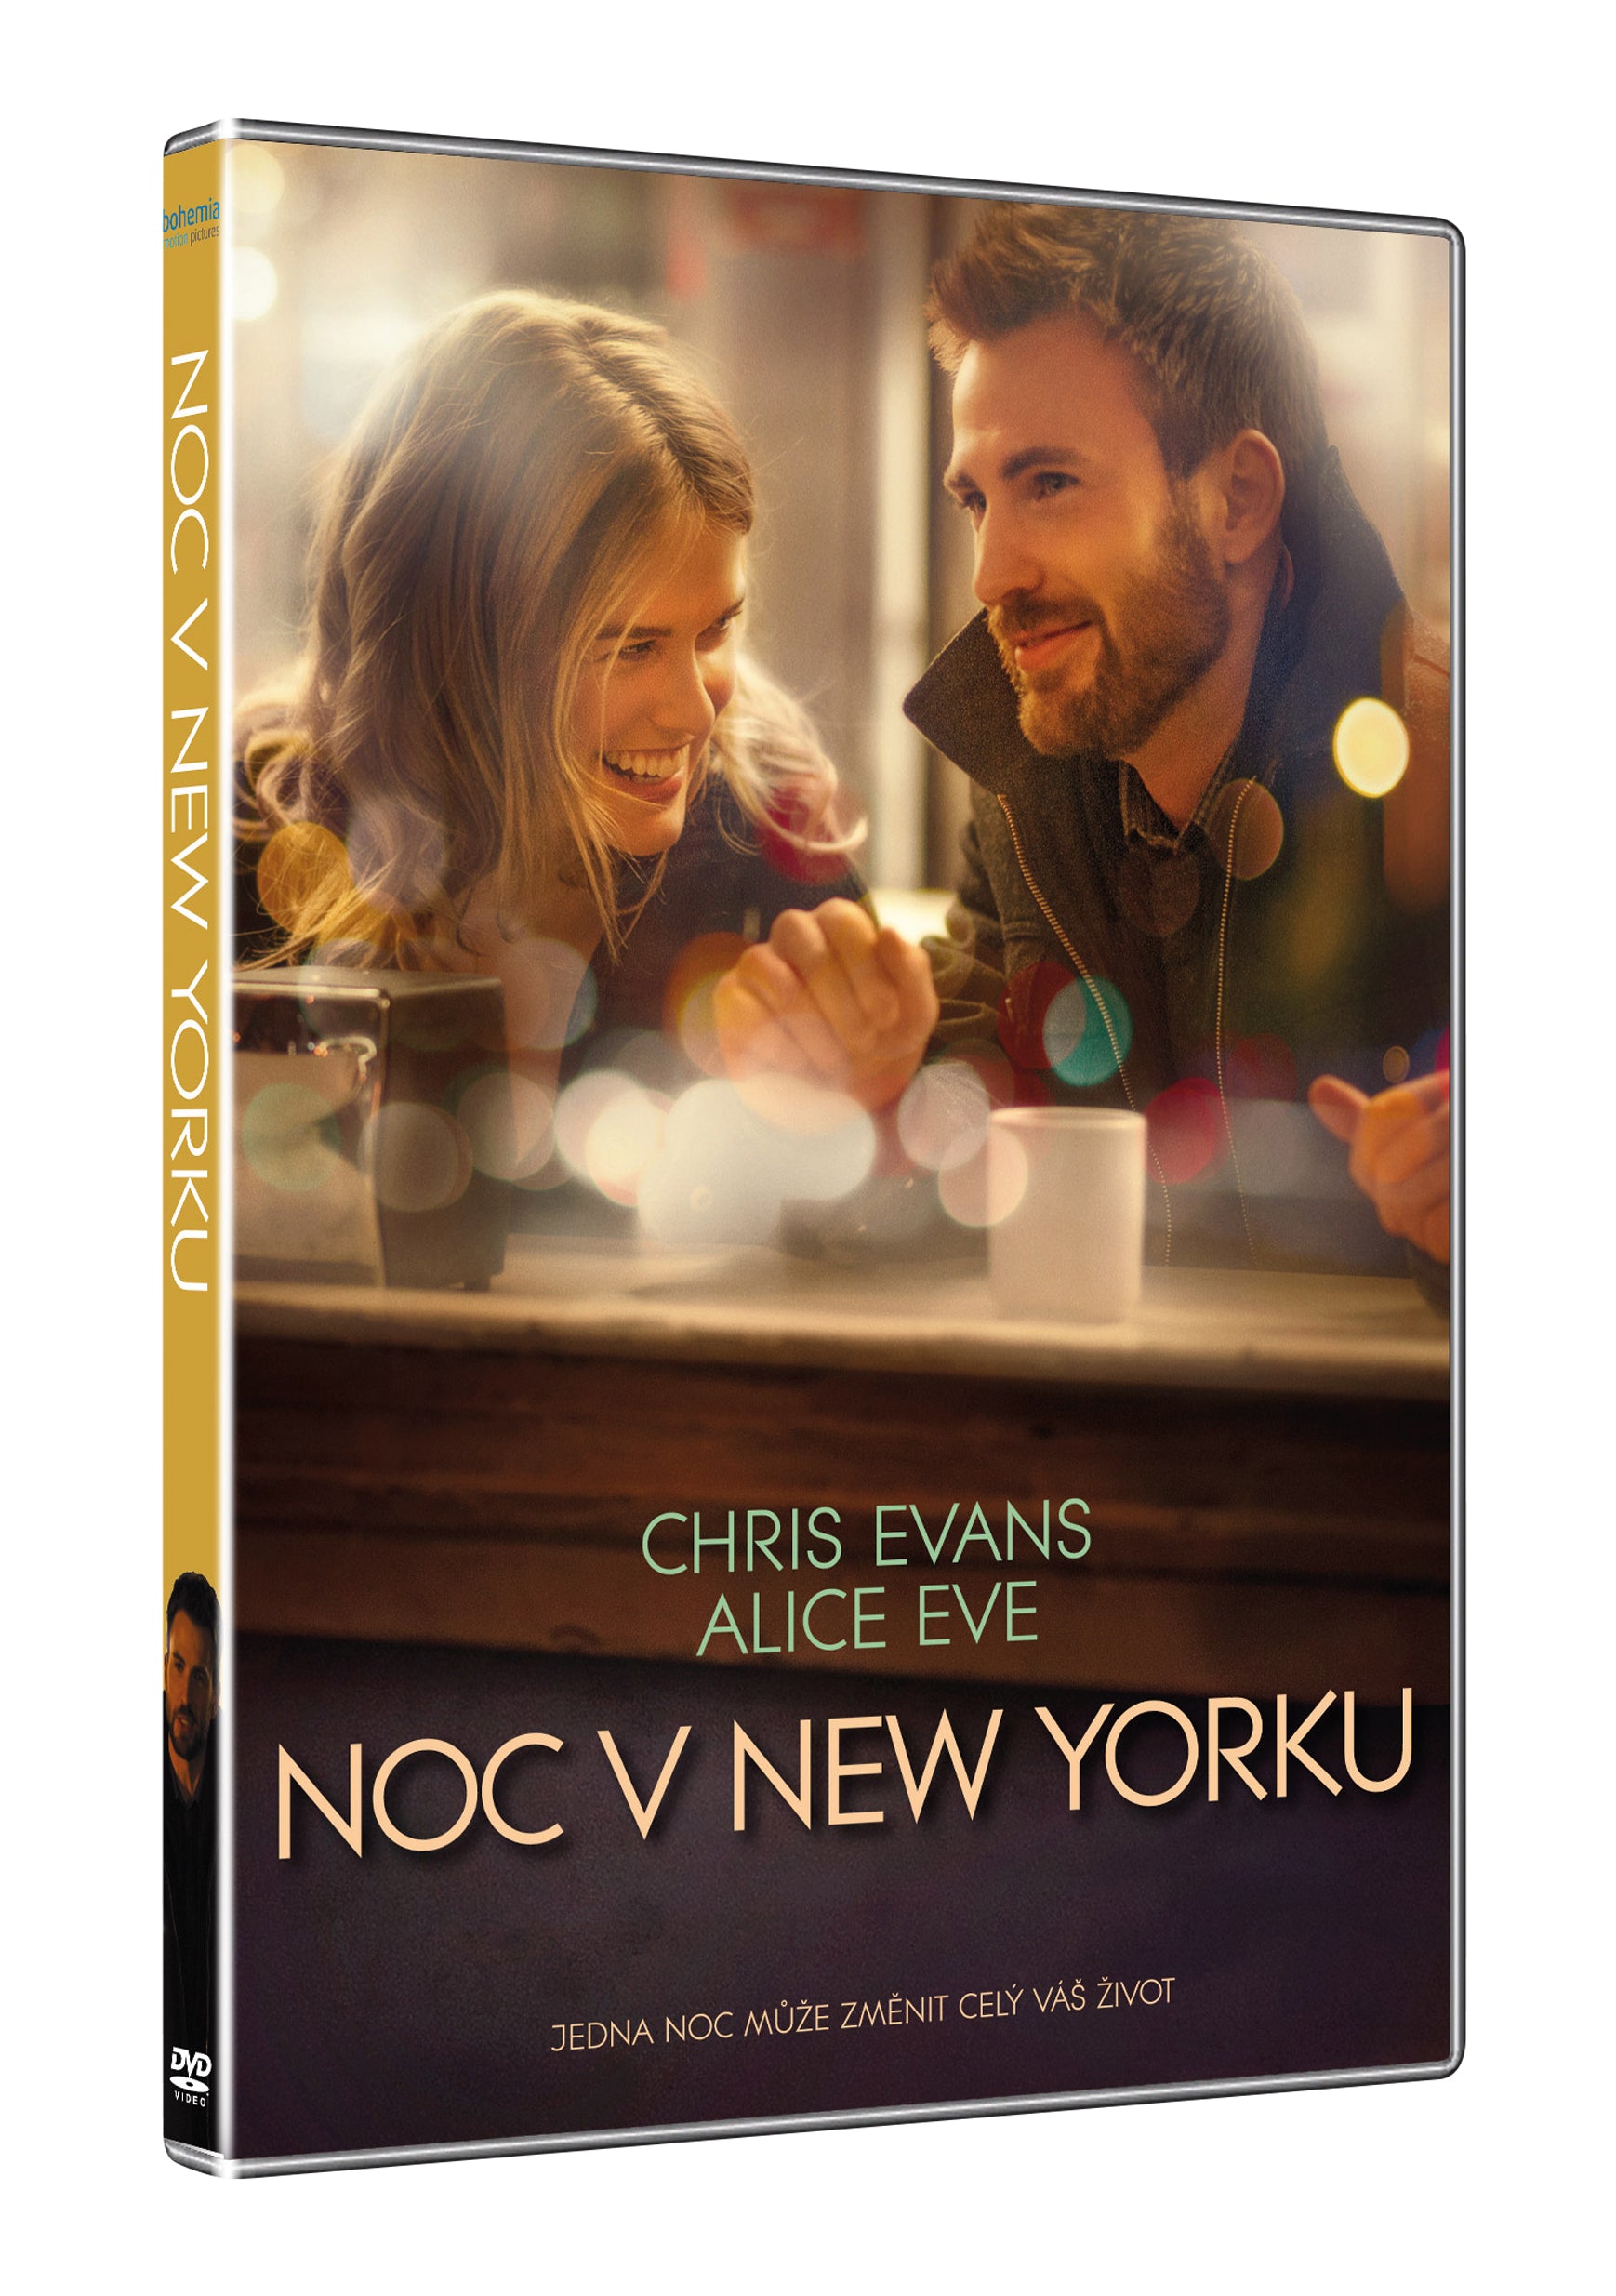 Noc v New Yorku DVD / Before We Go